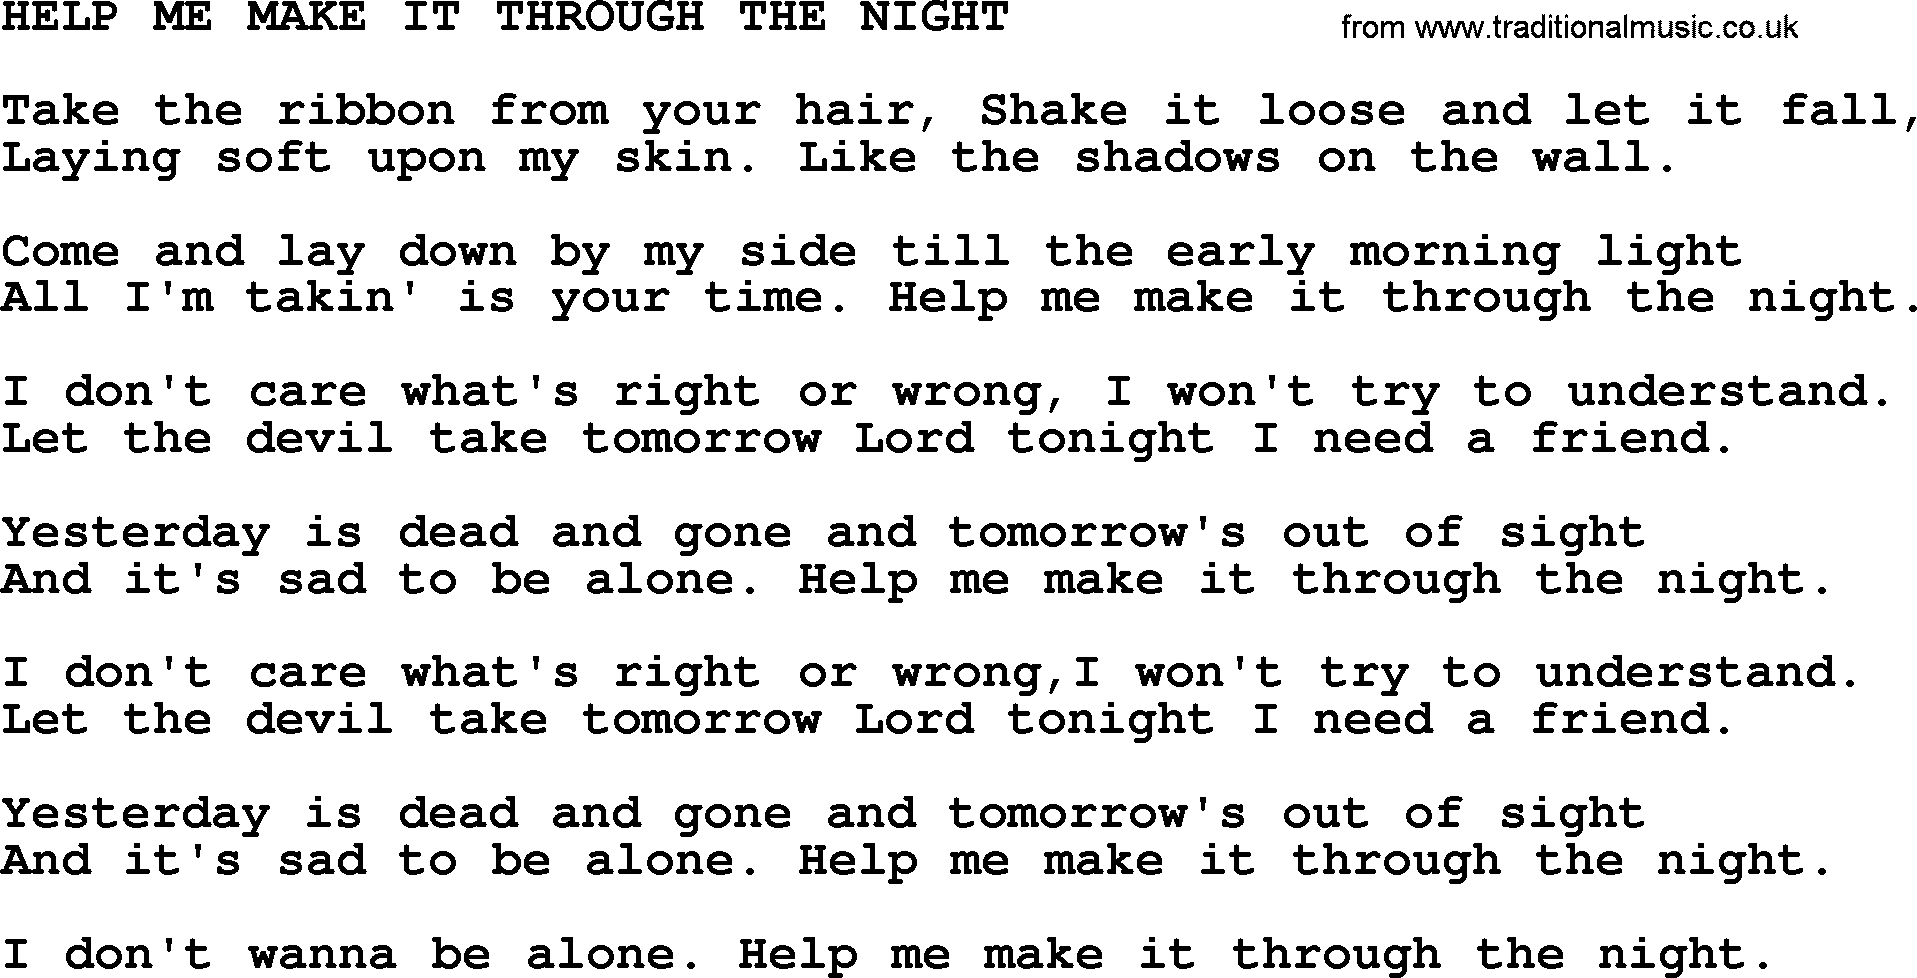 Kris Kristofferson song: Help Me Make It Through The Night lyrics